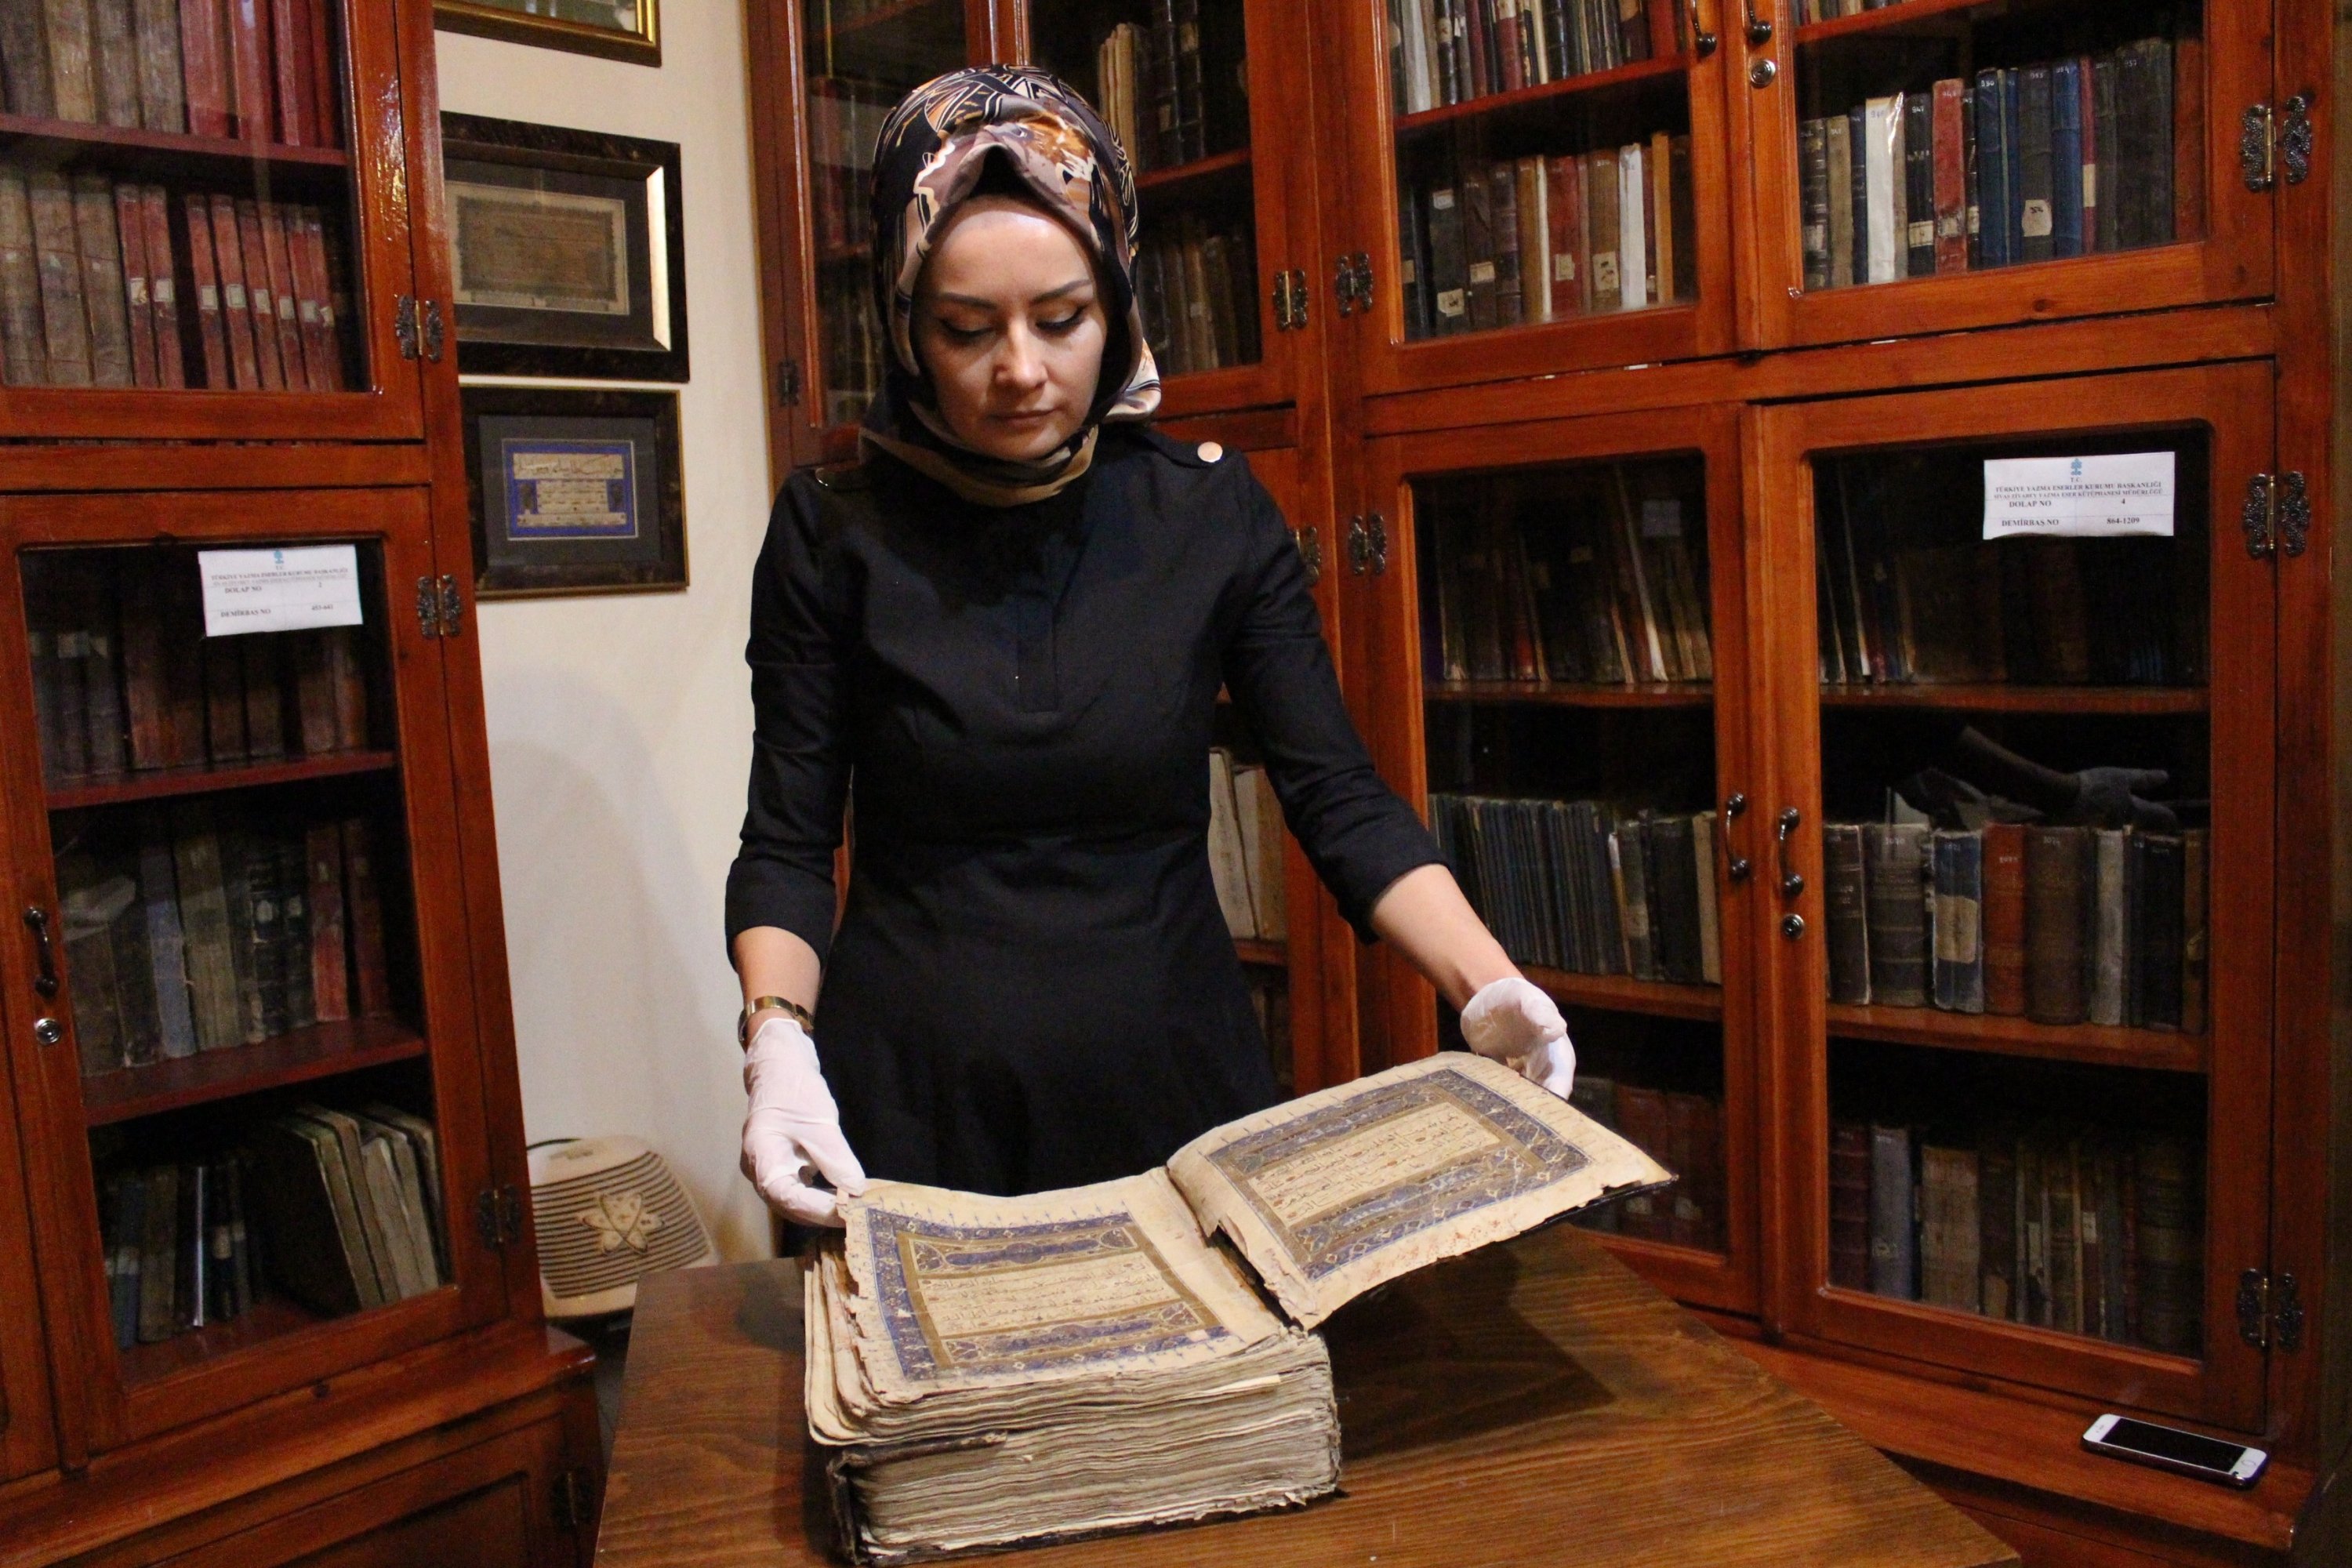 Direktur Perpustakaan Manuskrip Sivas Ziya Bey Dahiye Karagülle memajang Alquran tulisan tangan berusia enam abad di perpustakaan di pusat kota Sivas, Turki, 15 November 2021. (Foto IHA)